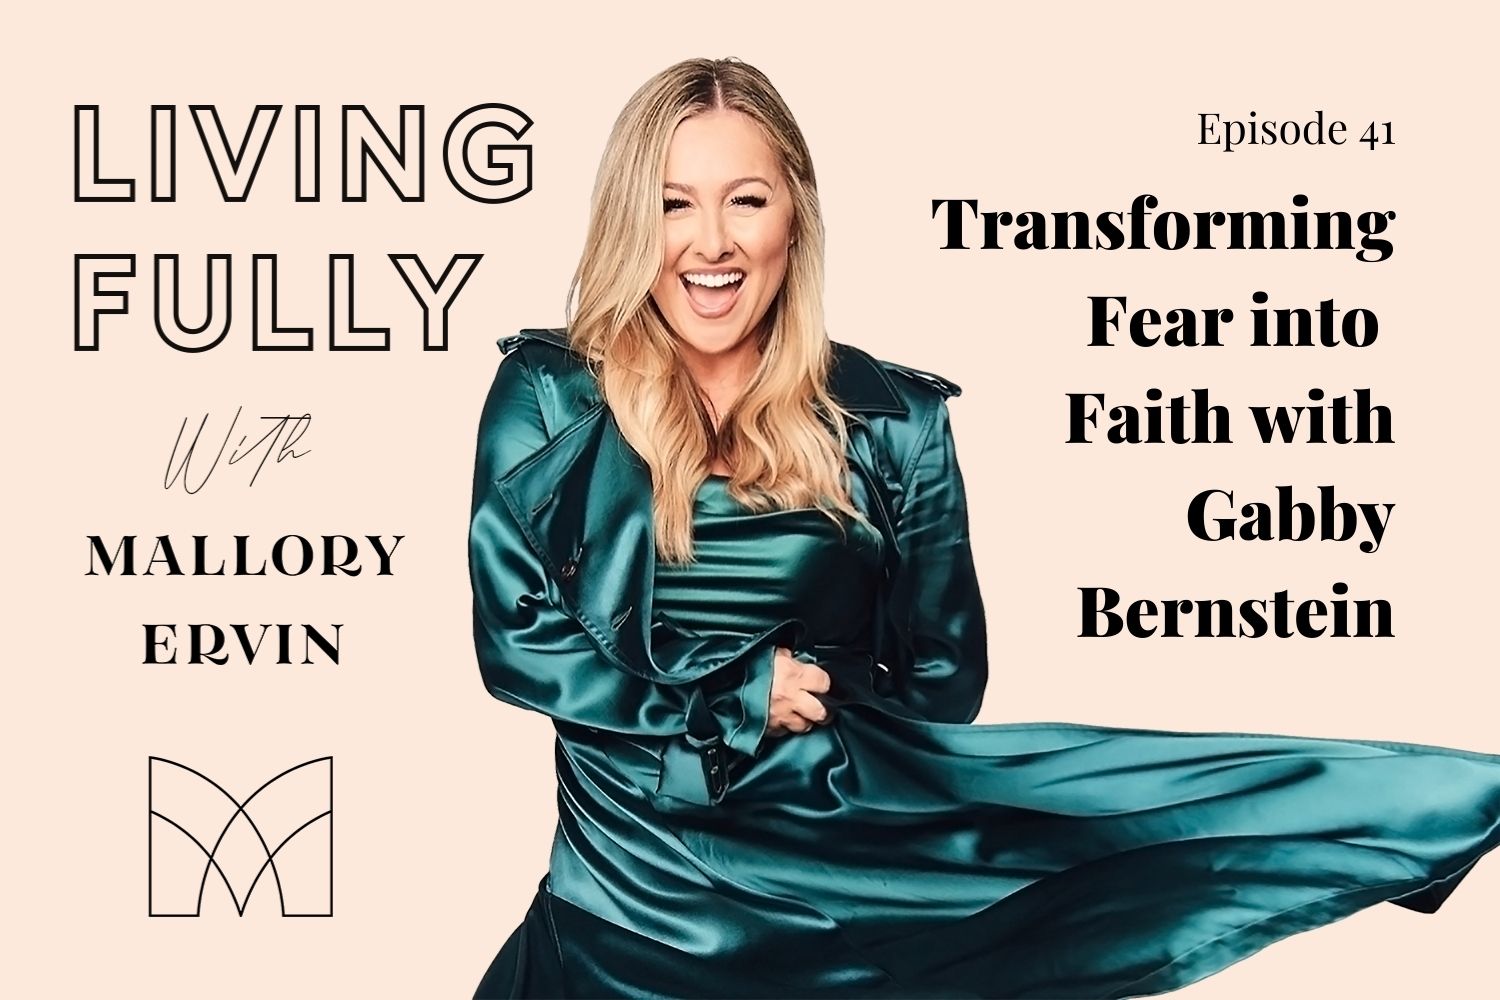 Transforming Fear into Faith with Gabby Bernstein